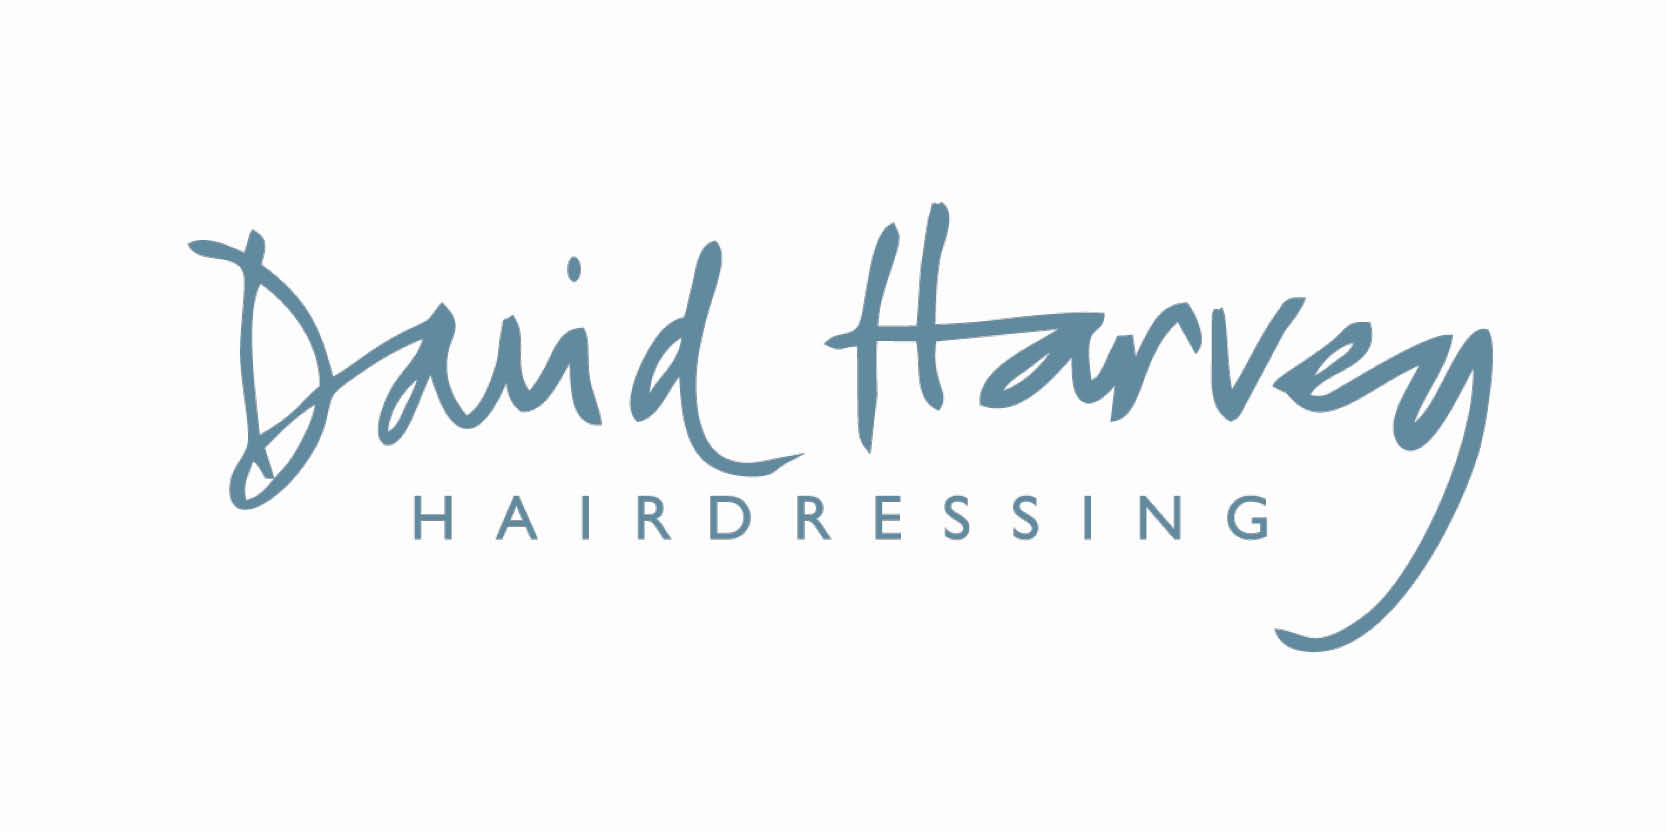 David Harvey Hairdressing logo